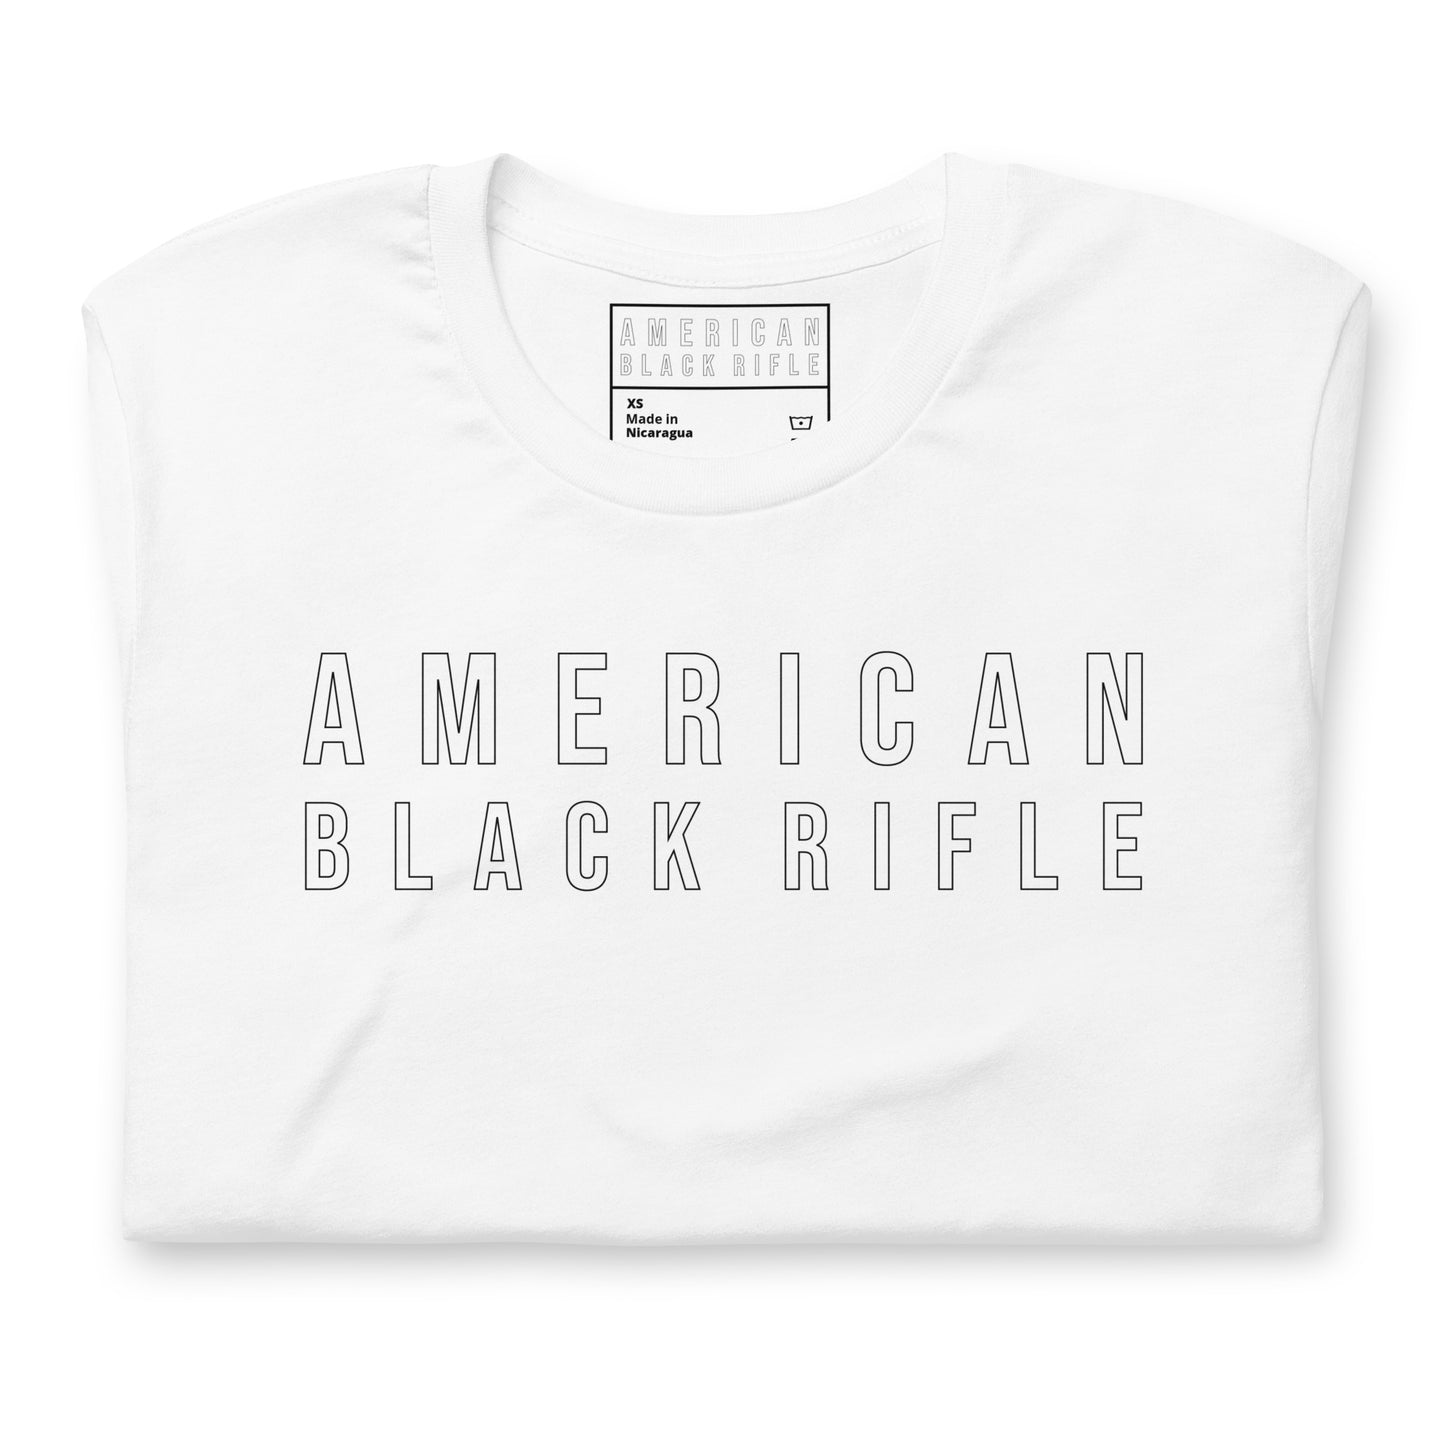 American Black Rifle BSS Unisex t-shirt